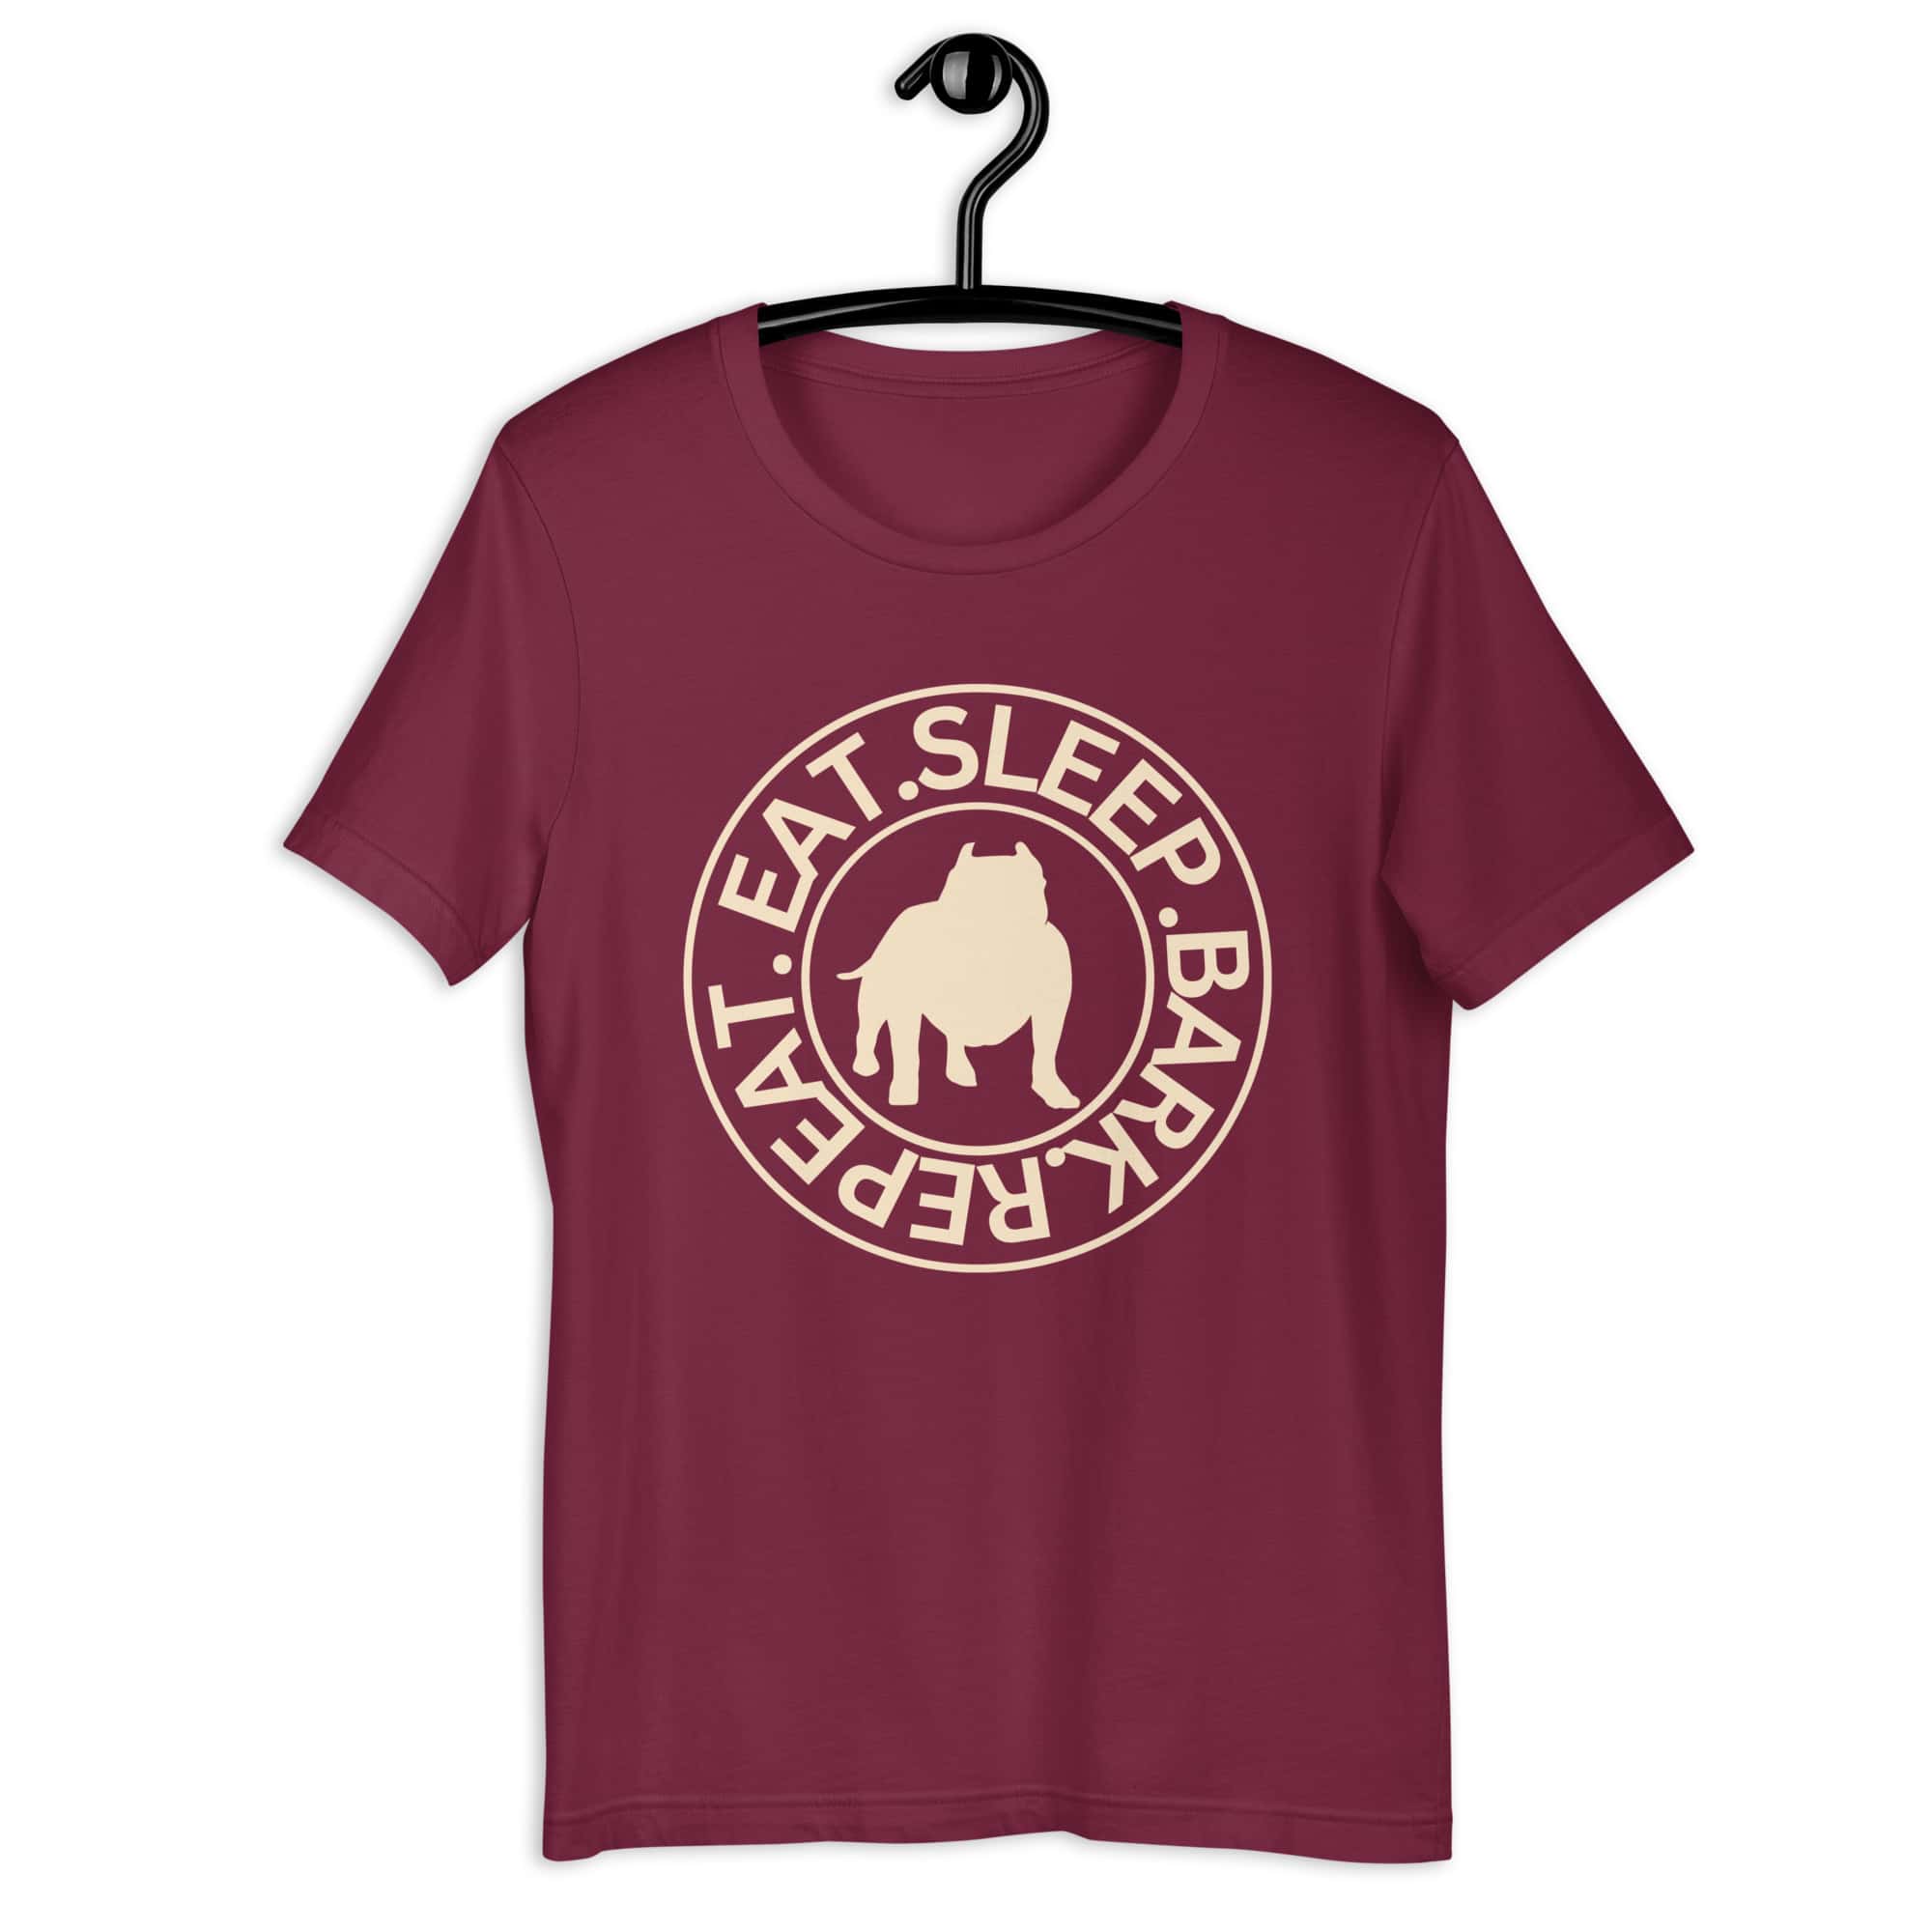 Eat Sleep Bark Repeat Bulldog Unisex T-Shirt. Maroon